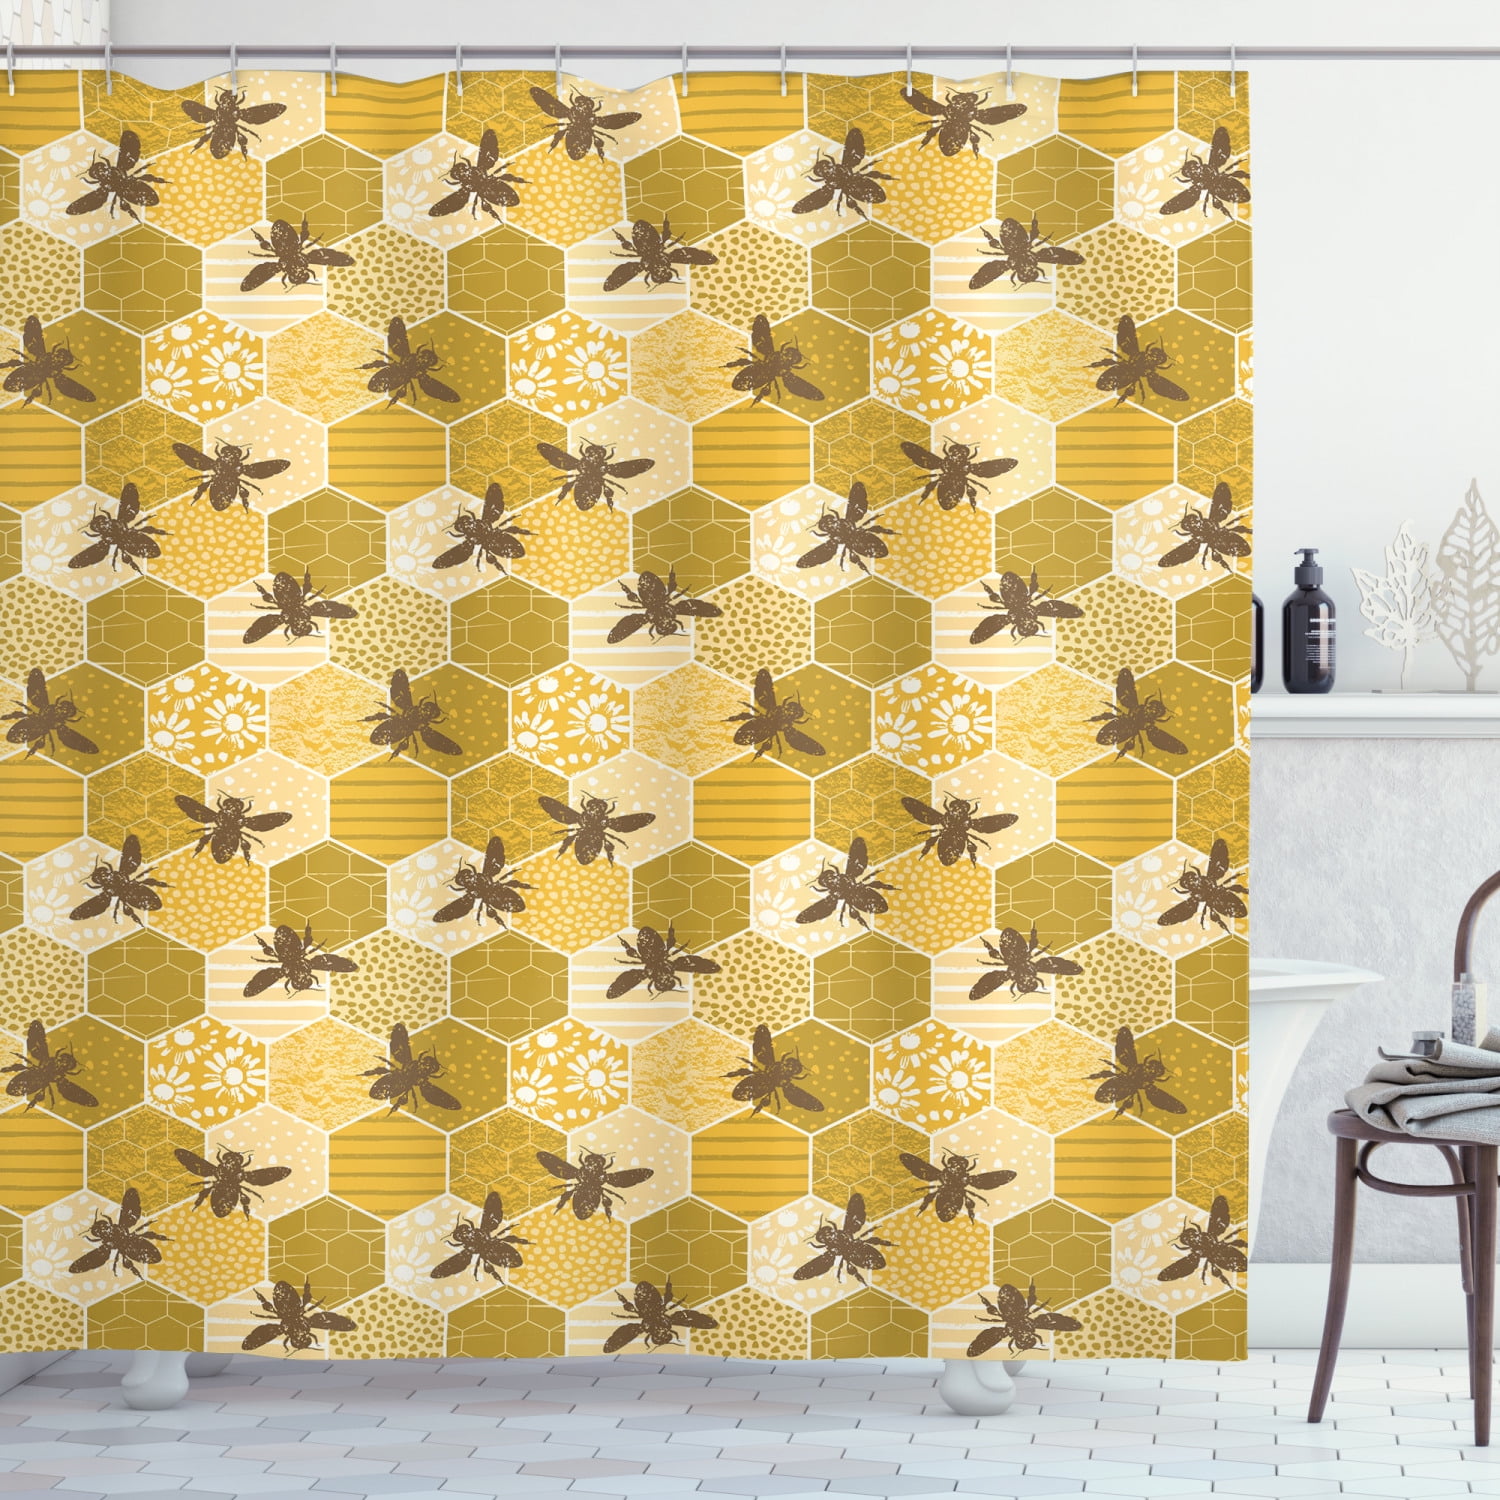 Honeycomb & Bee Shower Curtain Hooks Bathroom Mat Rug Waterproof Fabric 72x72" 